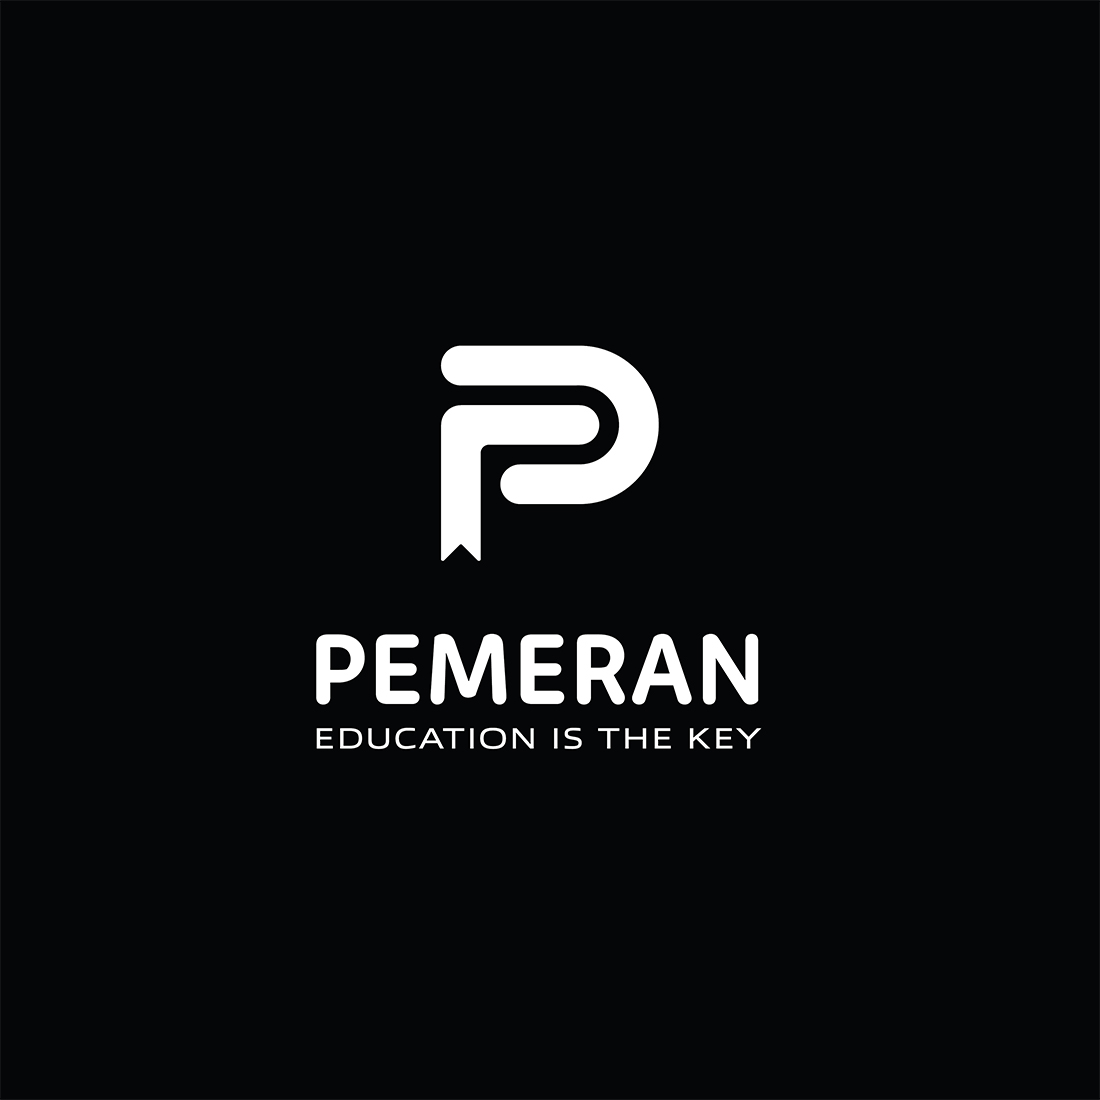 Pemeran Logo Design Black and White Template preview image.